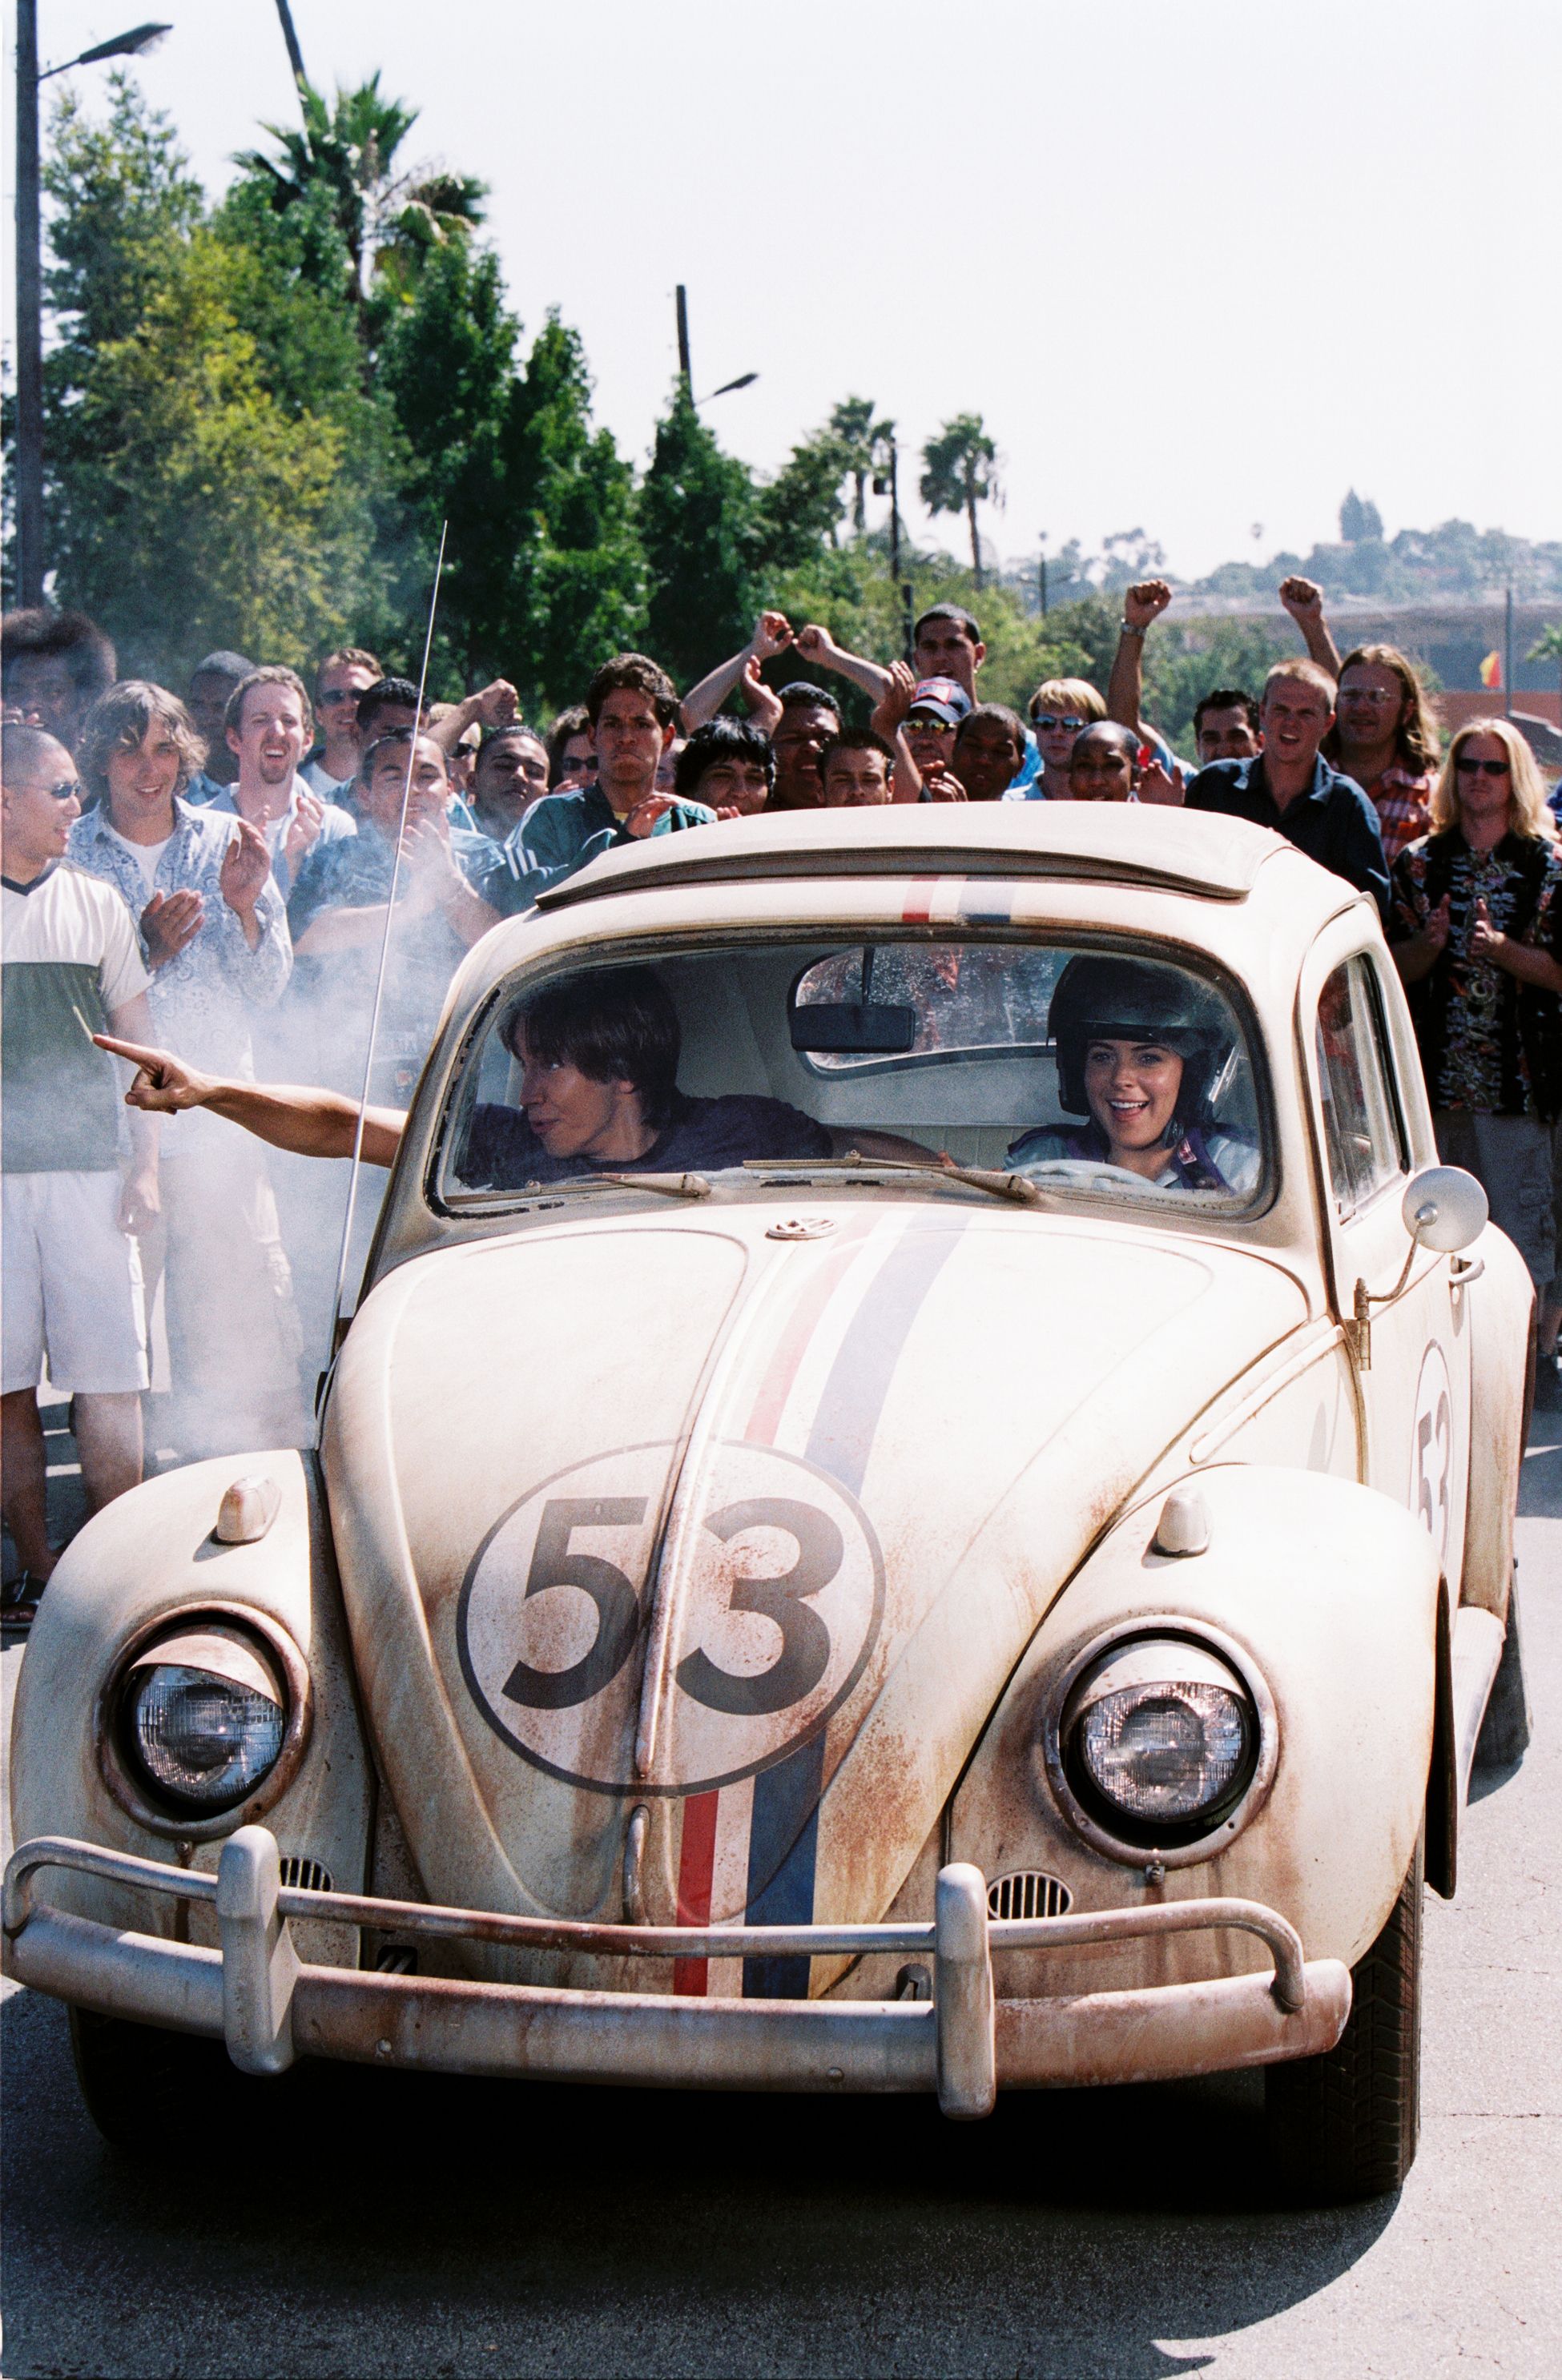 Herbie Fully Loaded (2005)